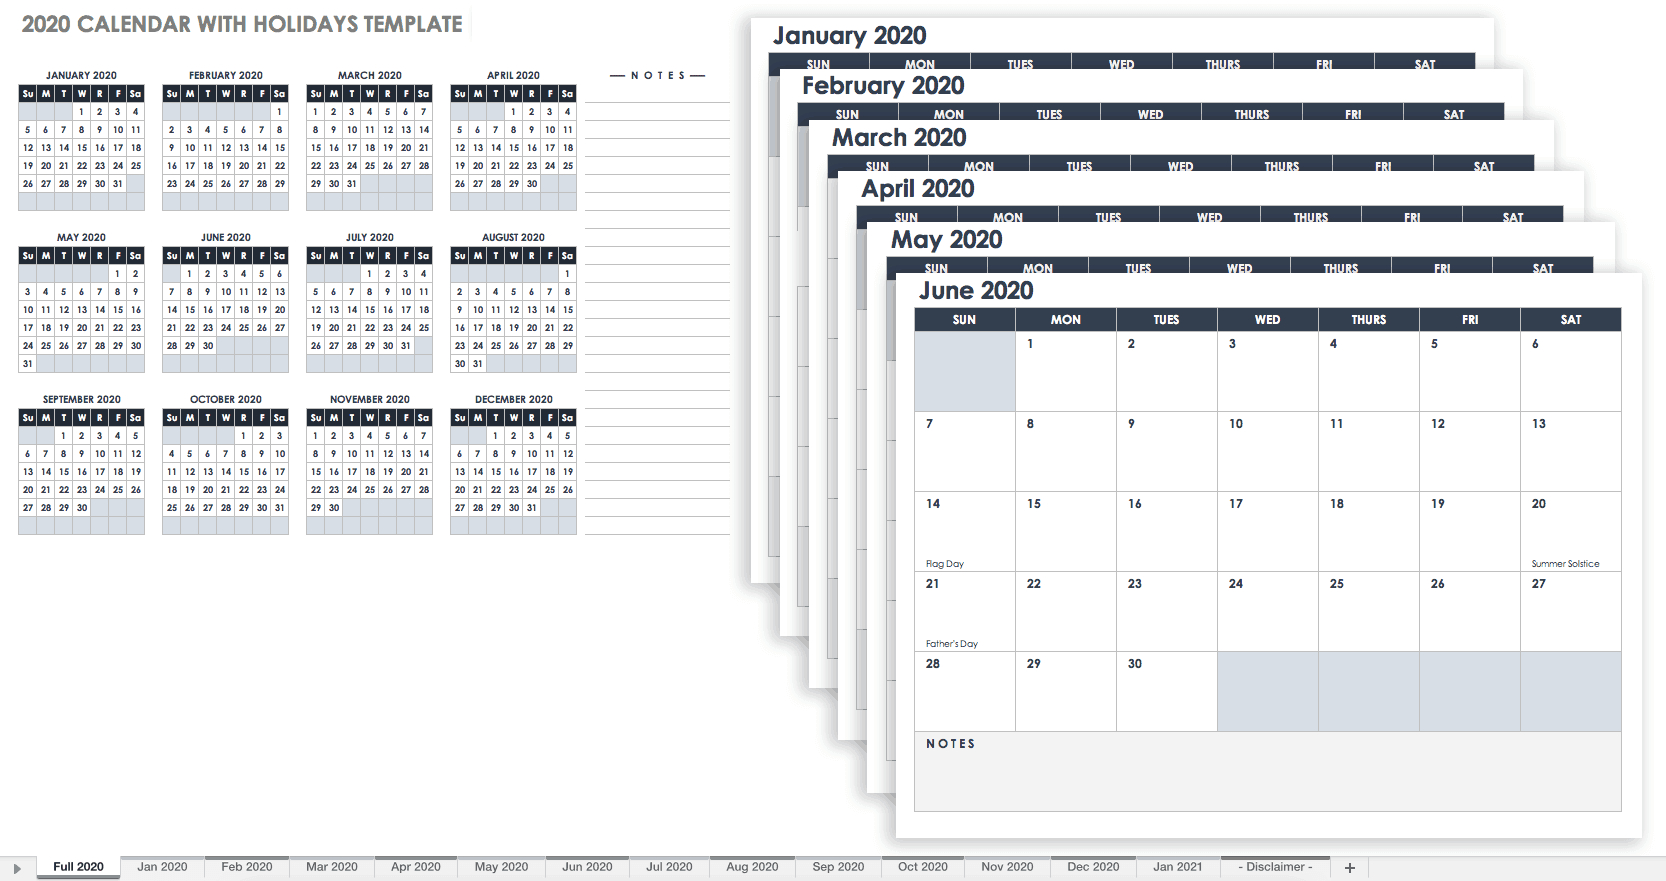 Free Google Calendar Templates | Smartsheet intended for 2020 Employee Attendance Calendar